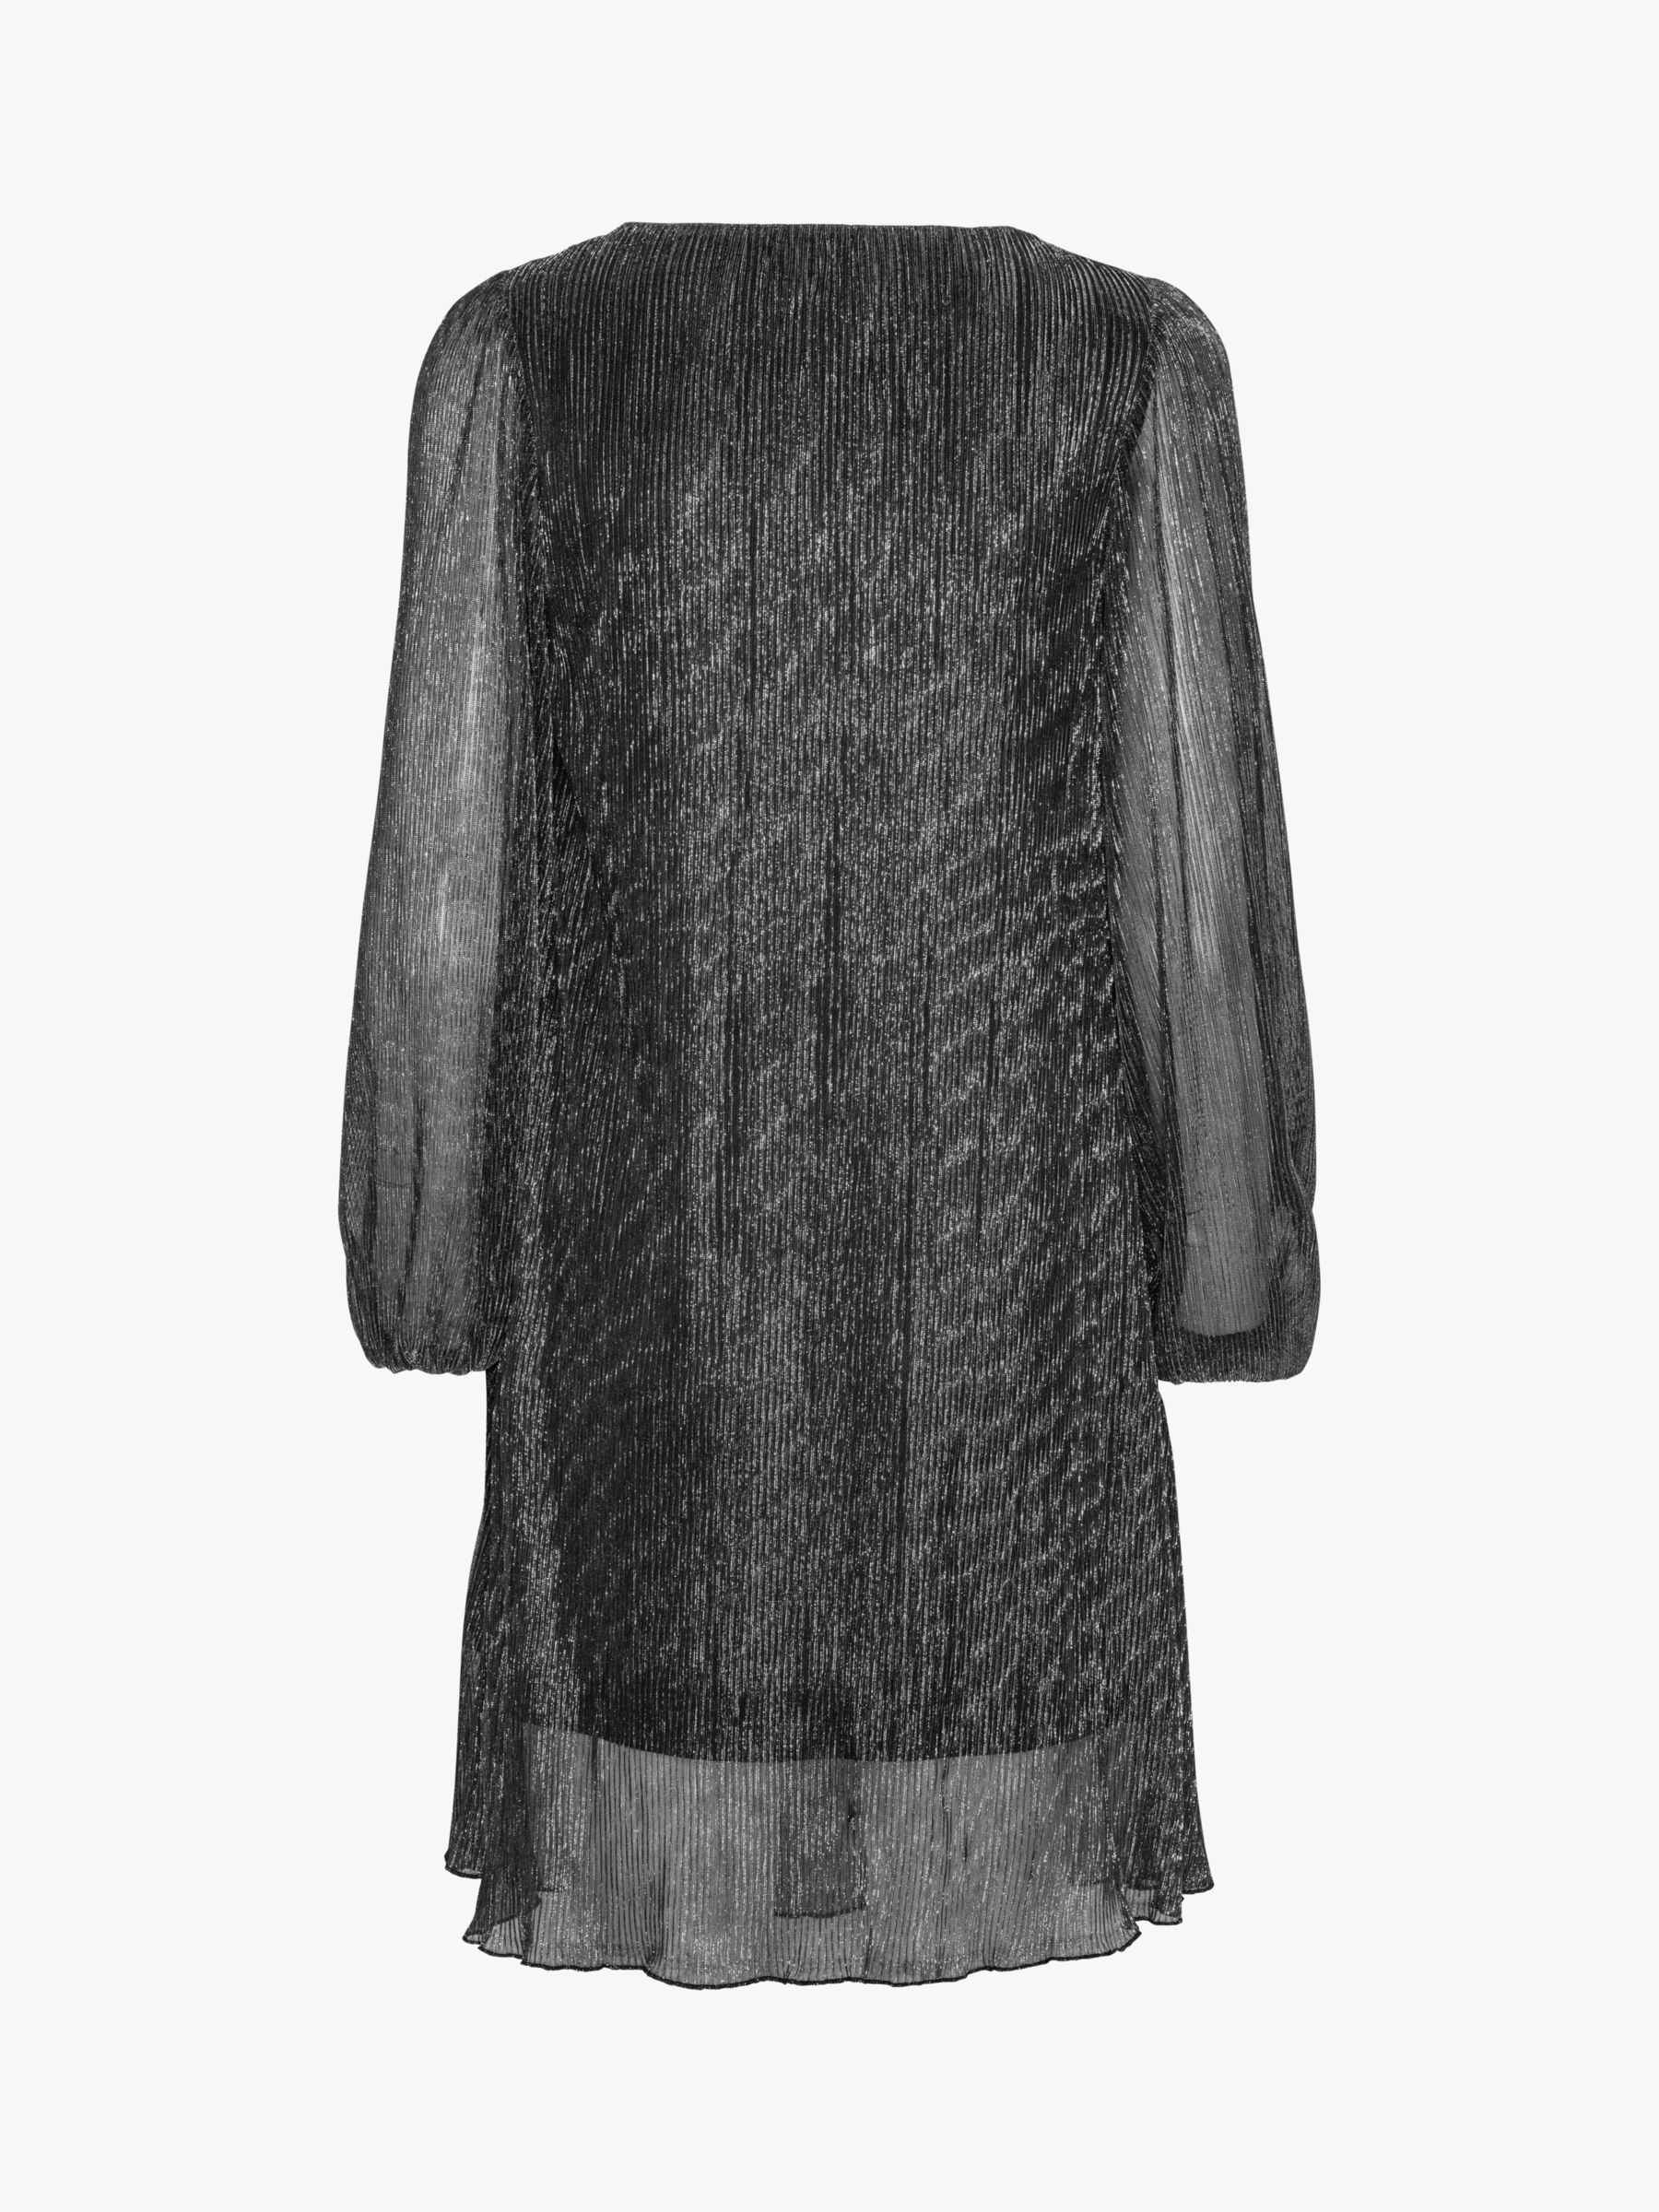 A-VIEW Fiba Mini Dress, Black/Silver at John Lewis & Partners